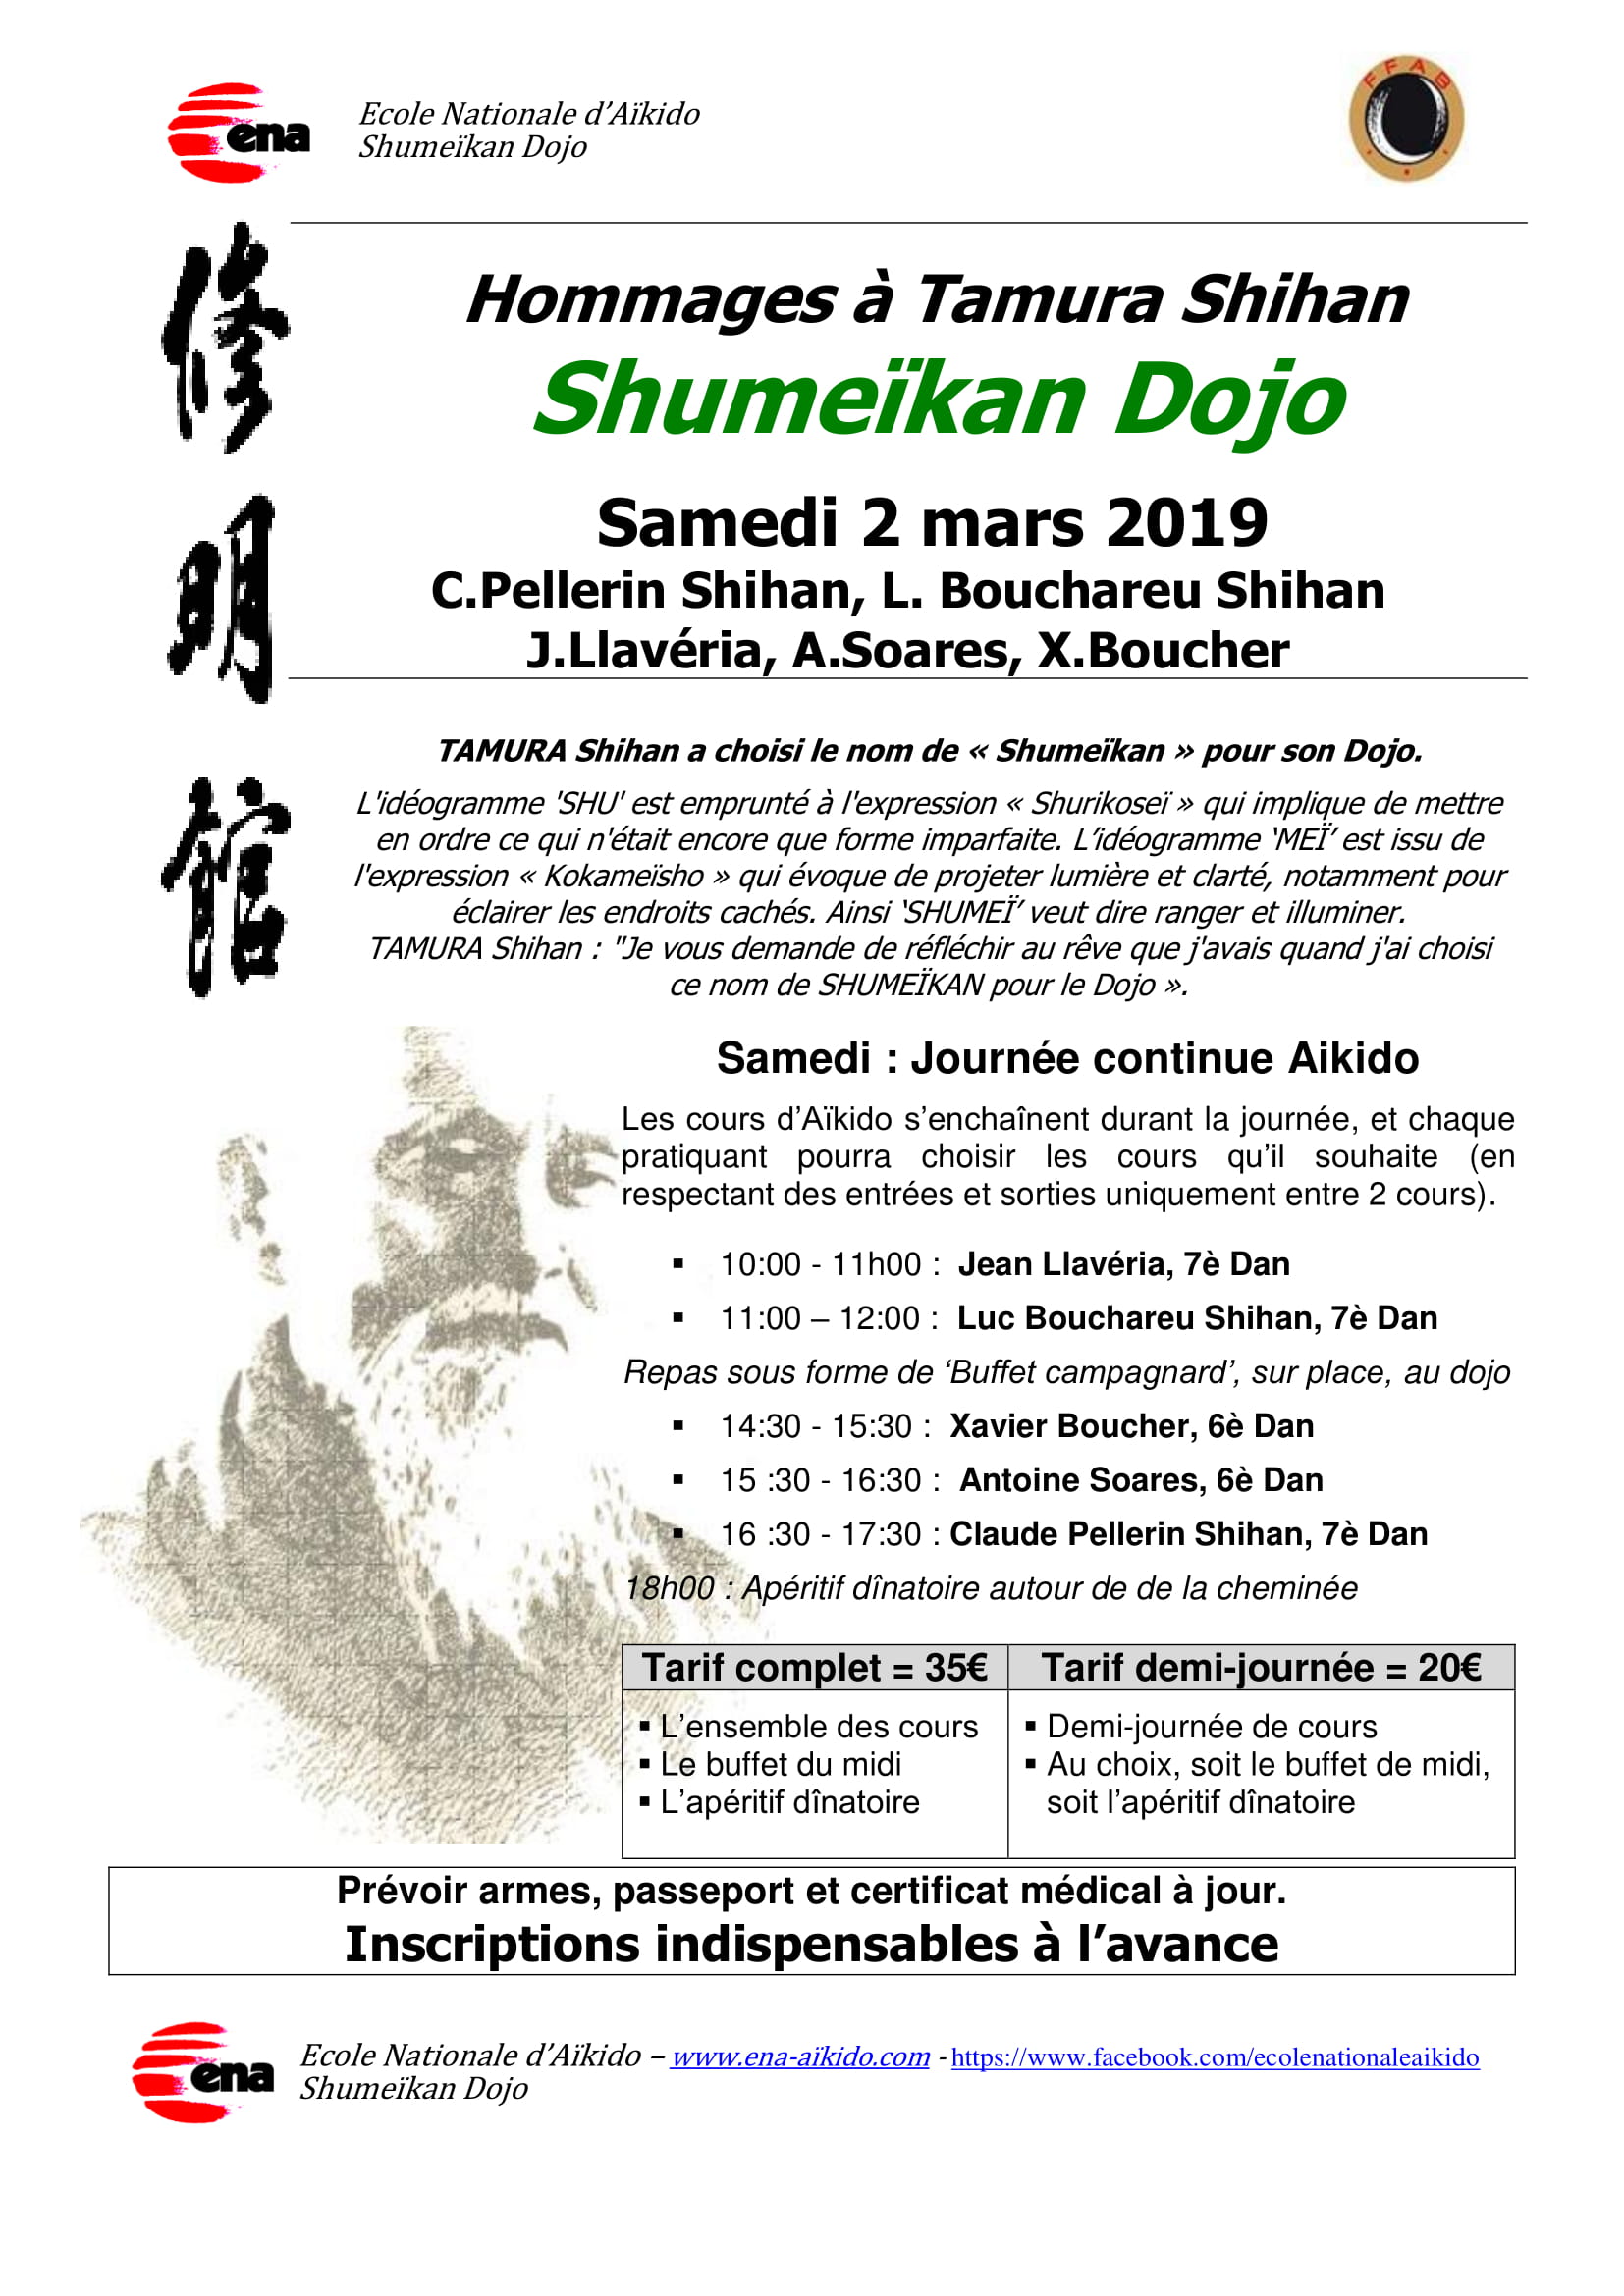 Samedi 2 mars 2019 Hommages à Tamura Shihan au Shumeïkan Dojo avec C.Pellerin Shihan, L.Bouchareu Shihan, J.Llavéria, A.Soares, X.Boucher